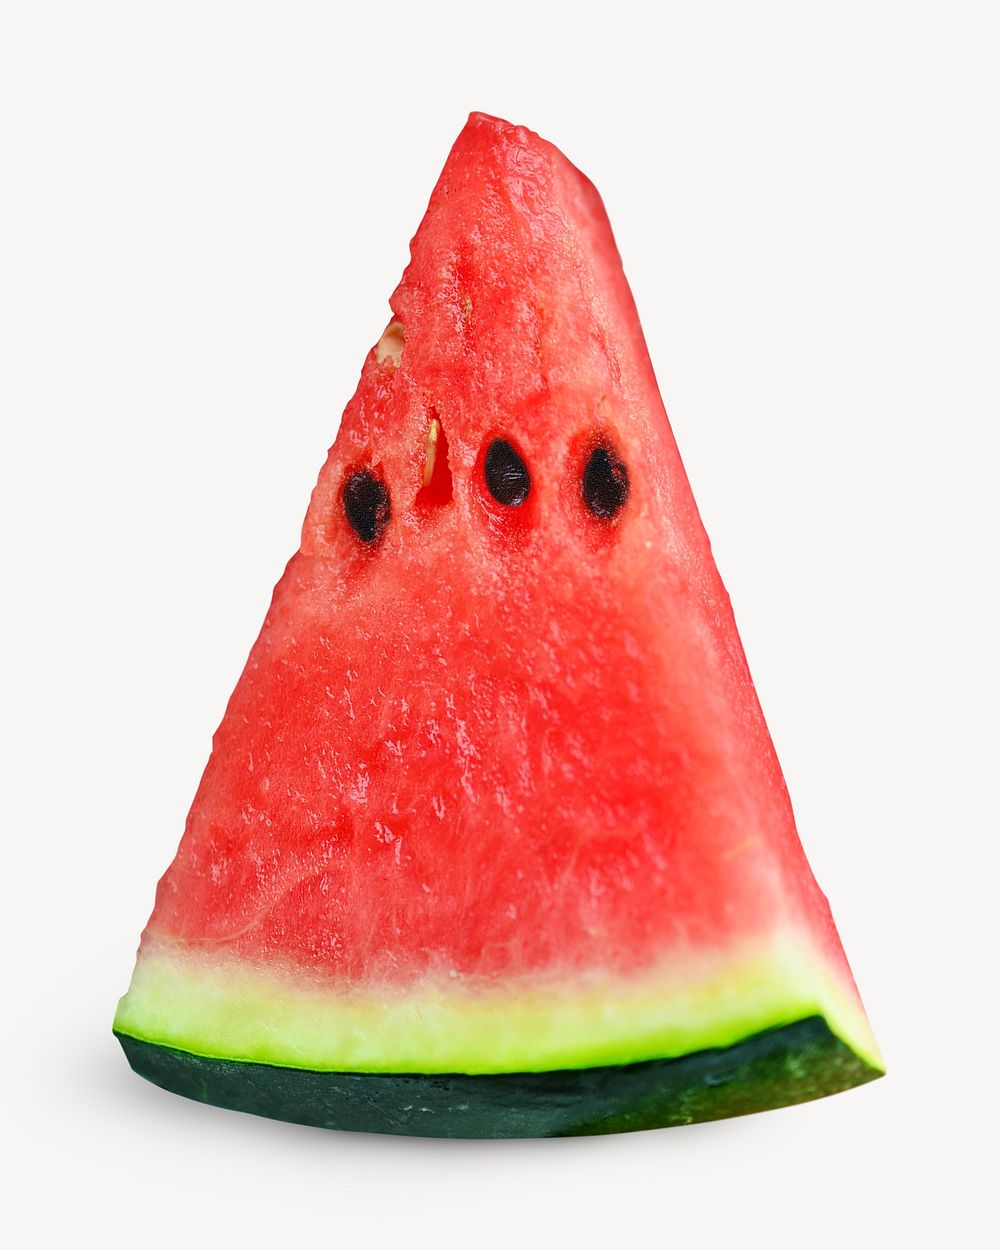 Fresh watermelon image on white design